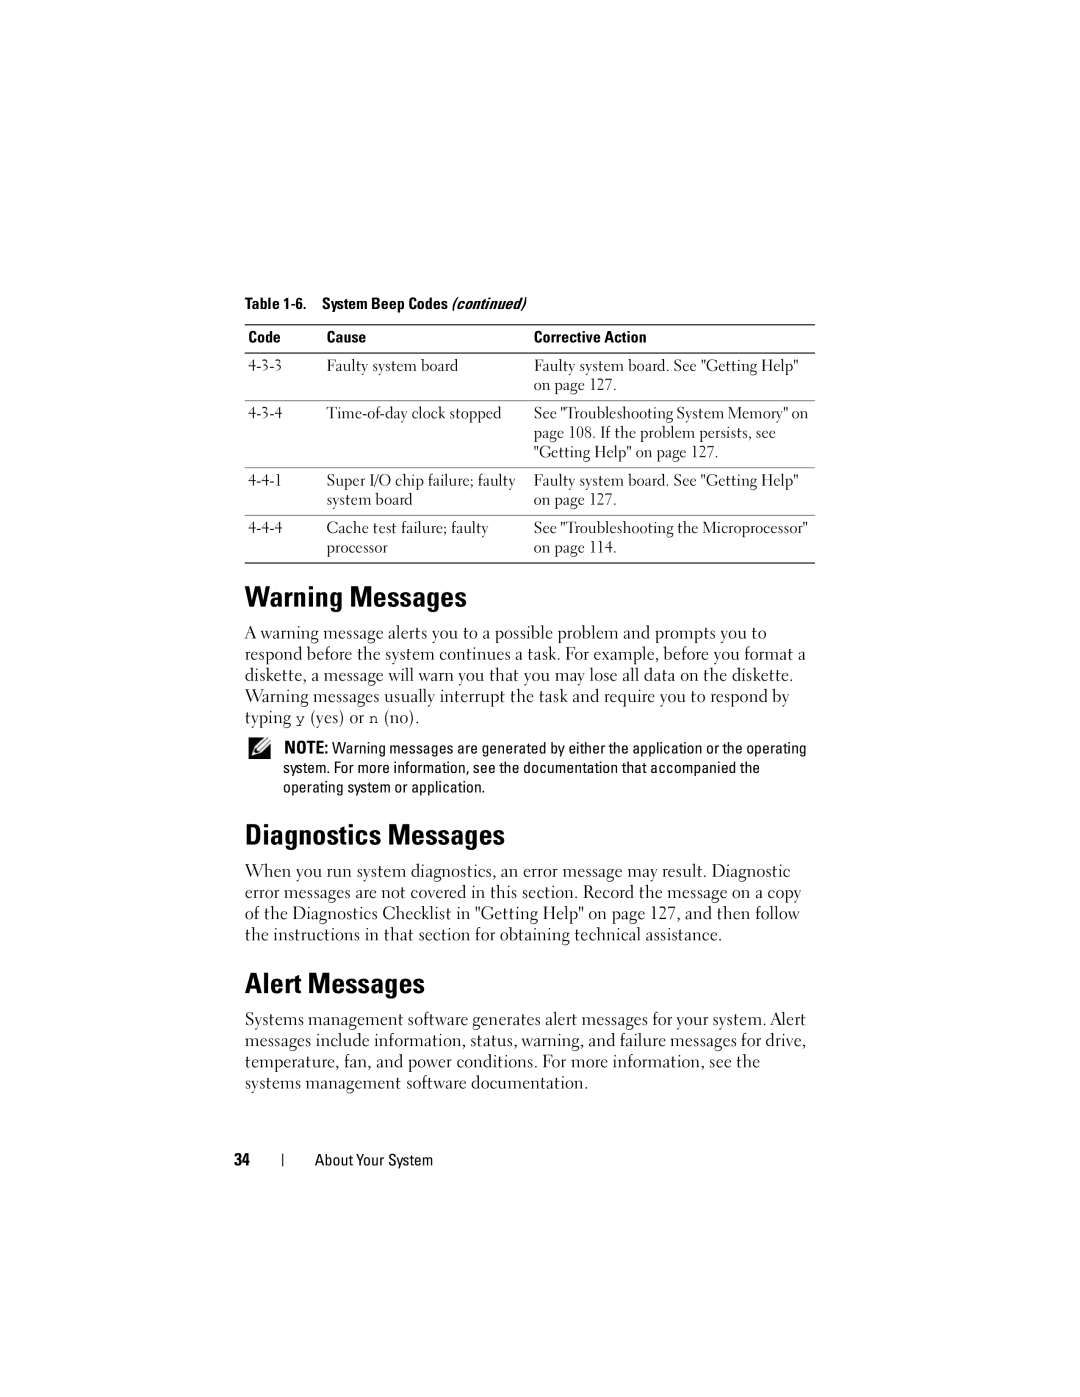 Dell NM176 owner manual Diagnostics Messages, Alert Messages 